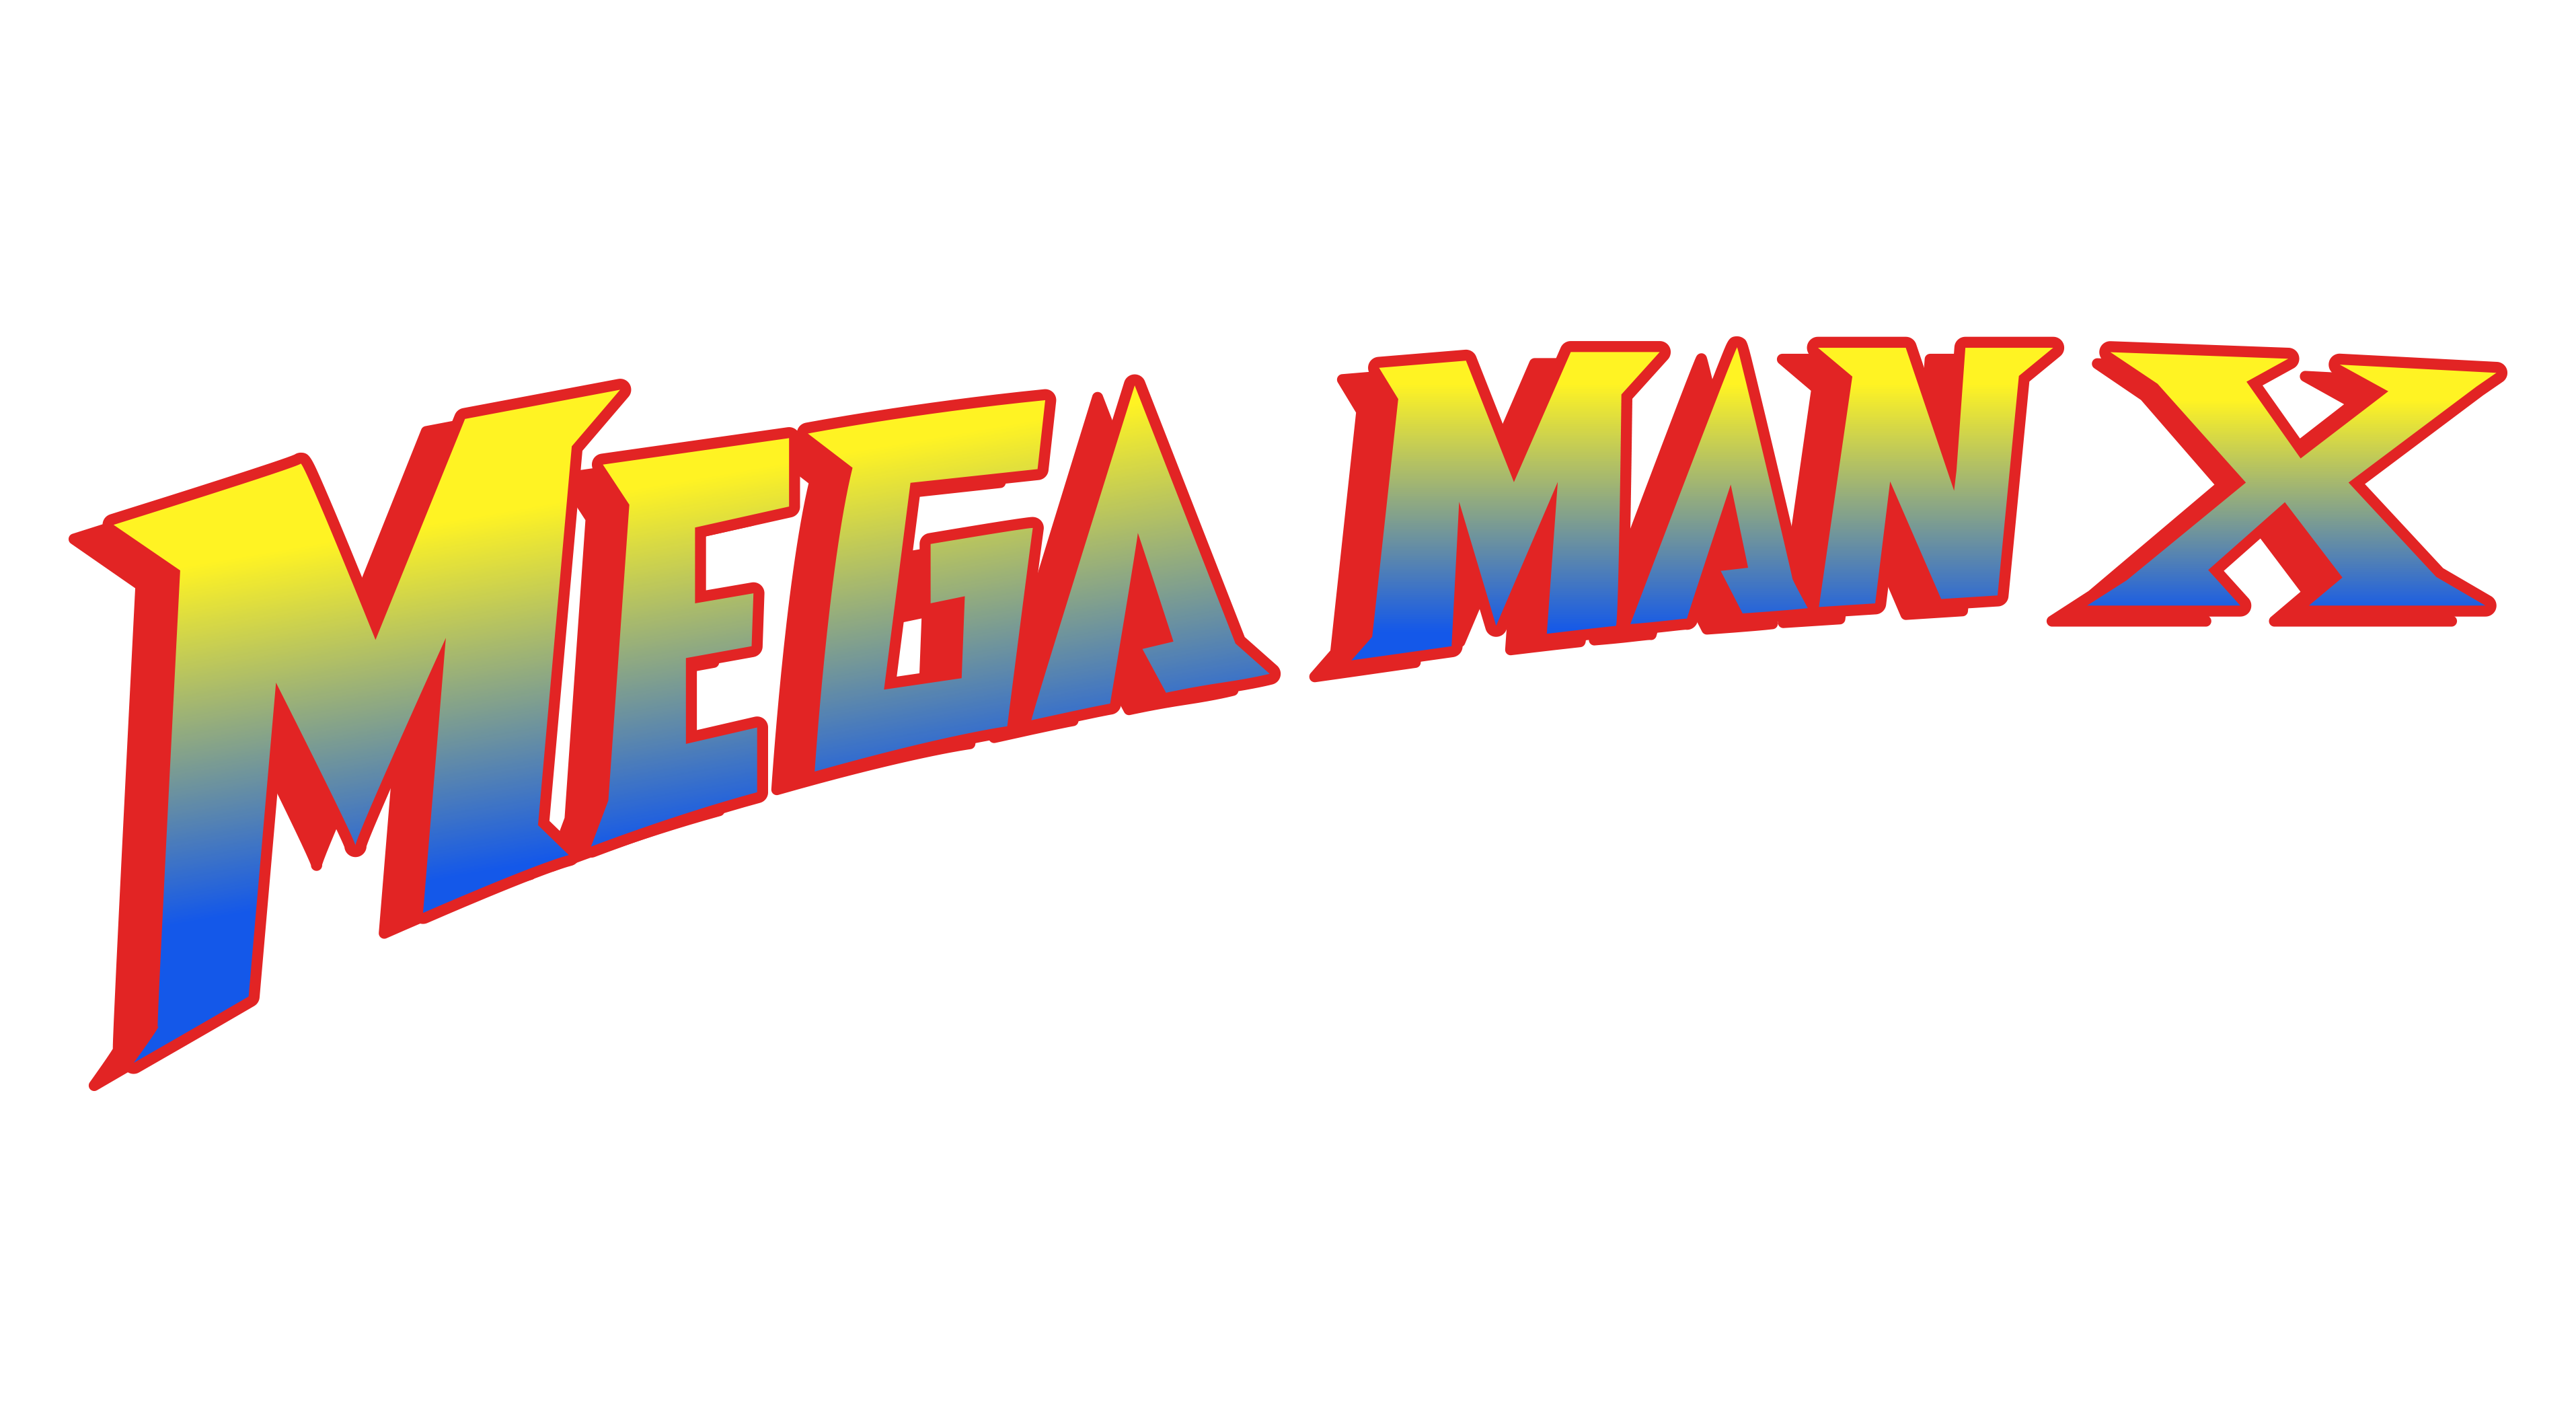 Megaman x logo - litoposters